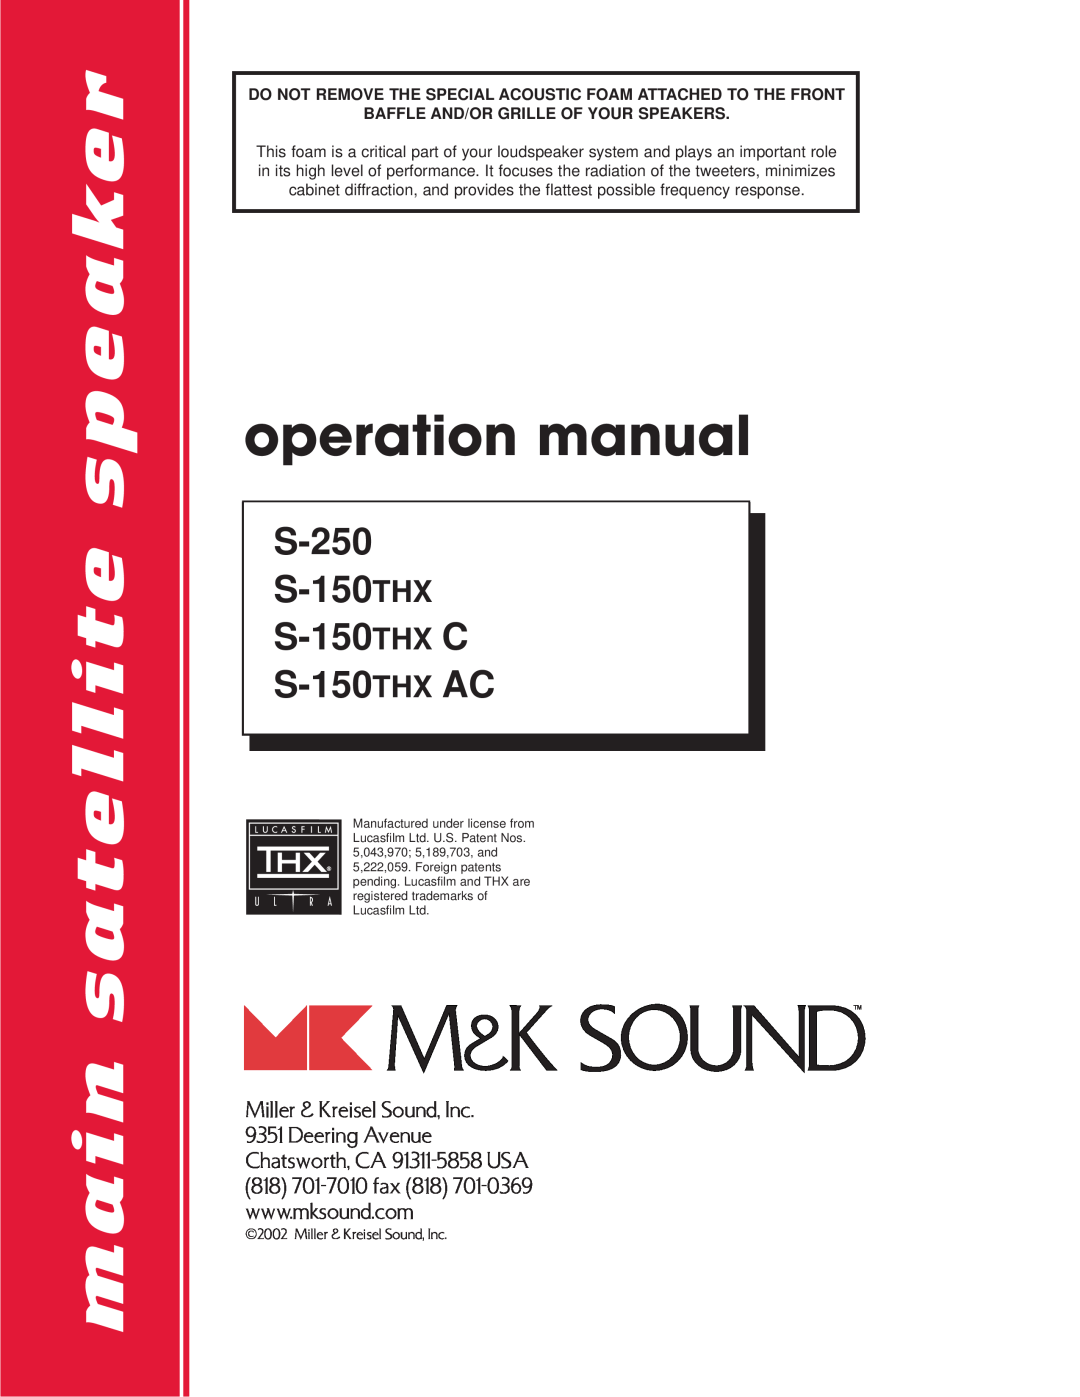 MK Sound operation manual main satellite speaker, S-250 S-150THX S-150THX C S-150THX AC, Chatsworth, CA 91311-5858USA 